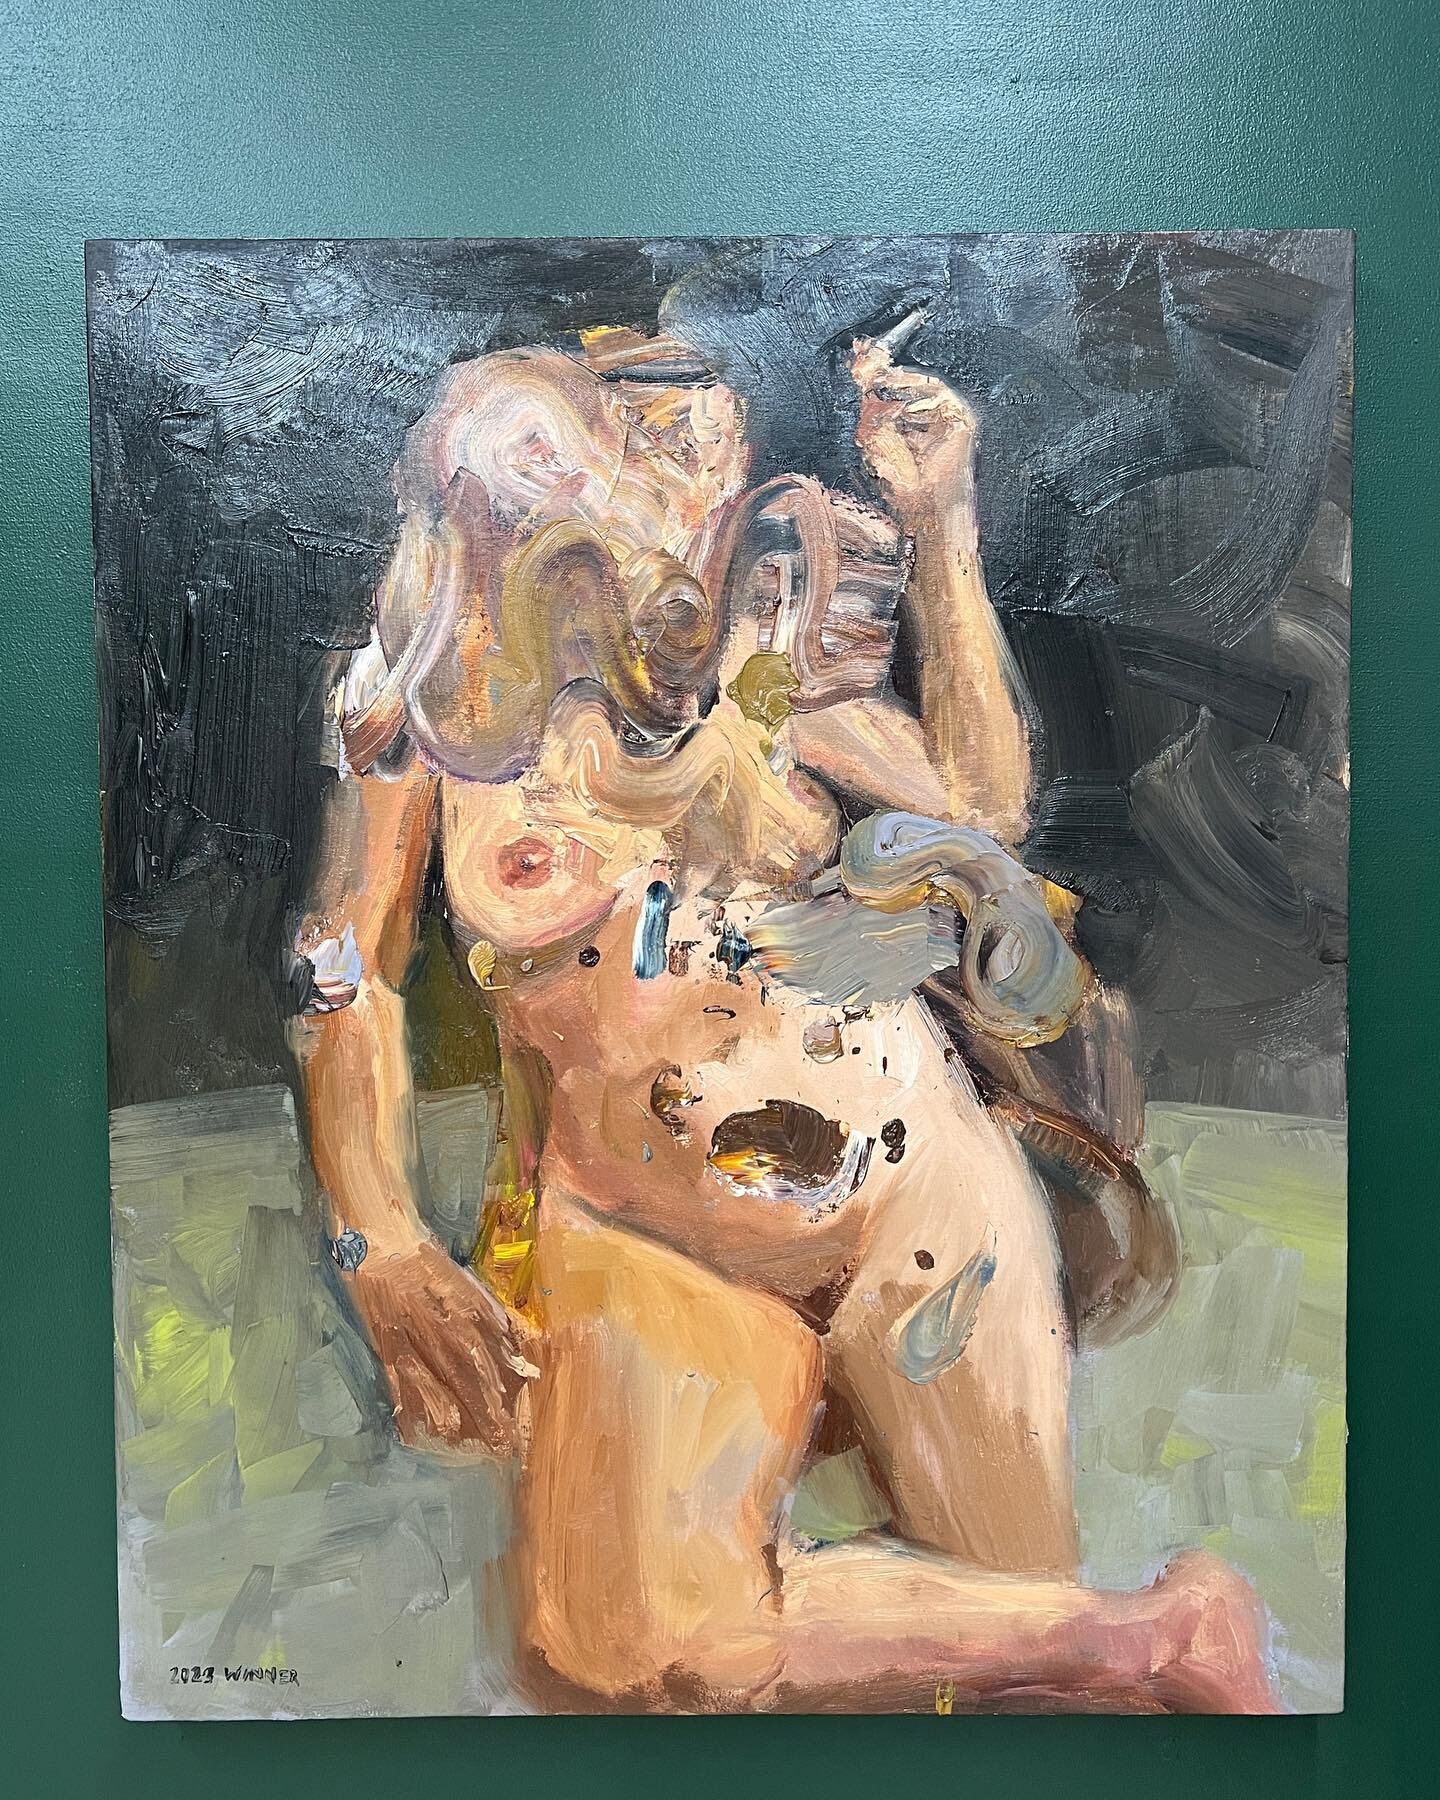 Fragment of Understanding
By Winner Jumalon (@winnerjumalon)

2023 
Oil on Canvas
3 x 2.5 ft